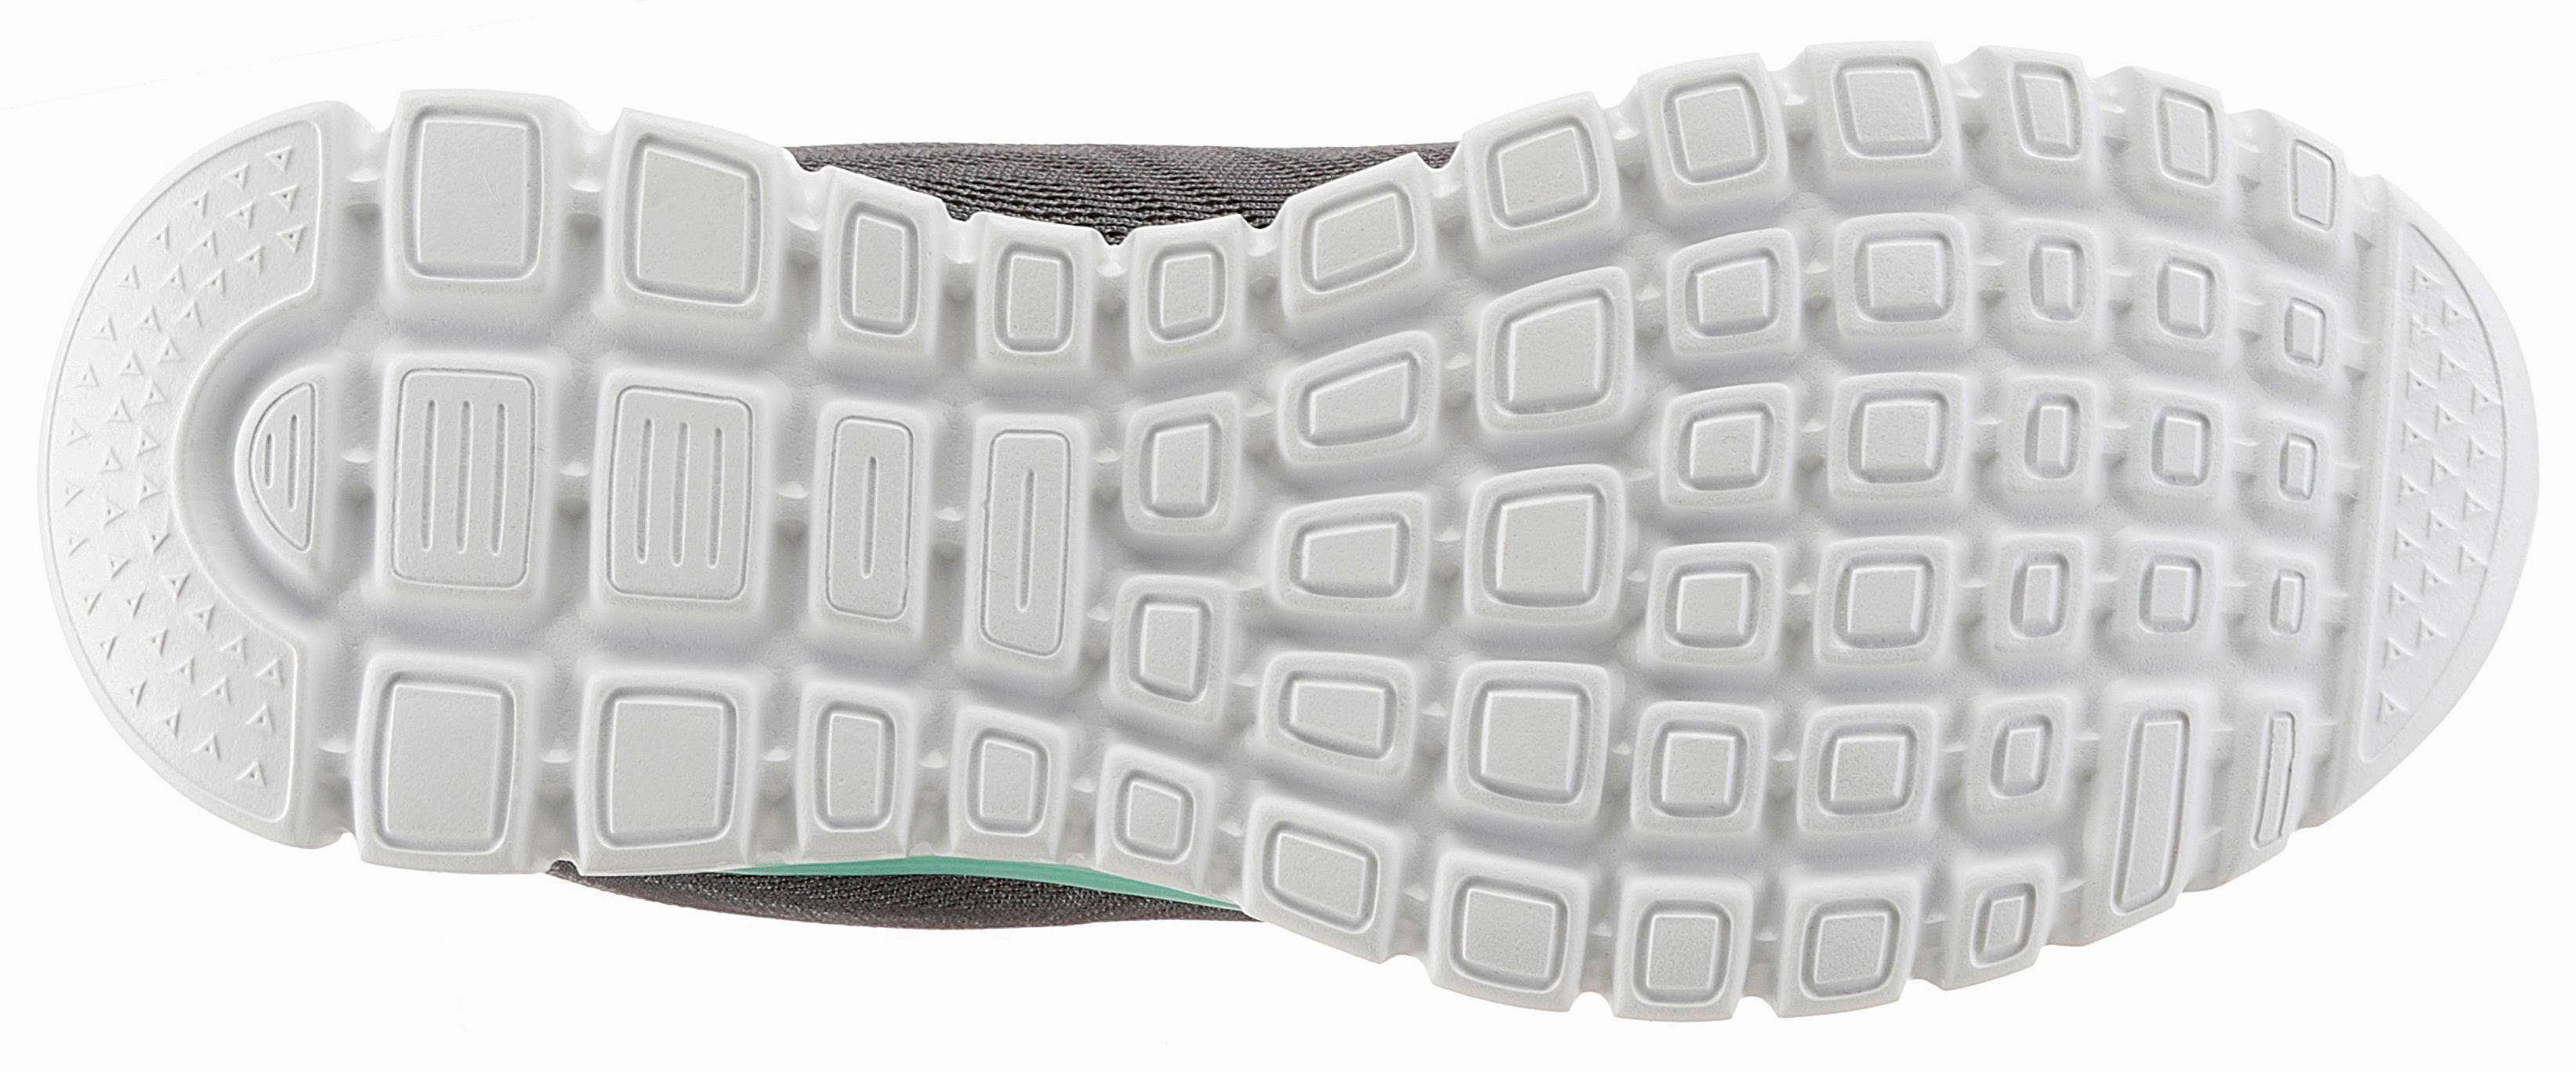 Skechers Graceful - Get durch grau-mint mit Sneaker Memory Dämpfung Connected Foam